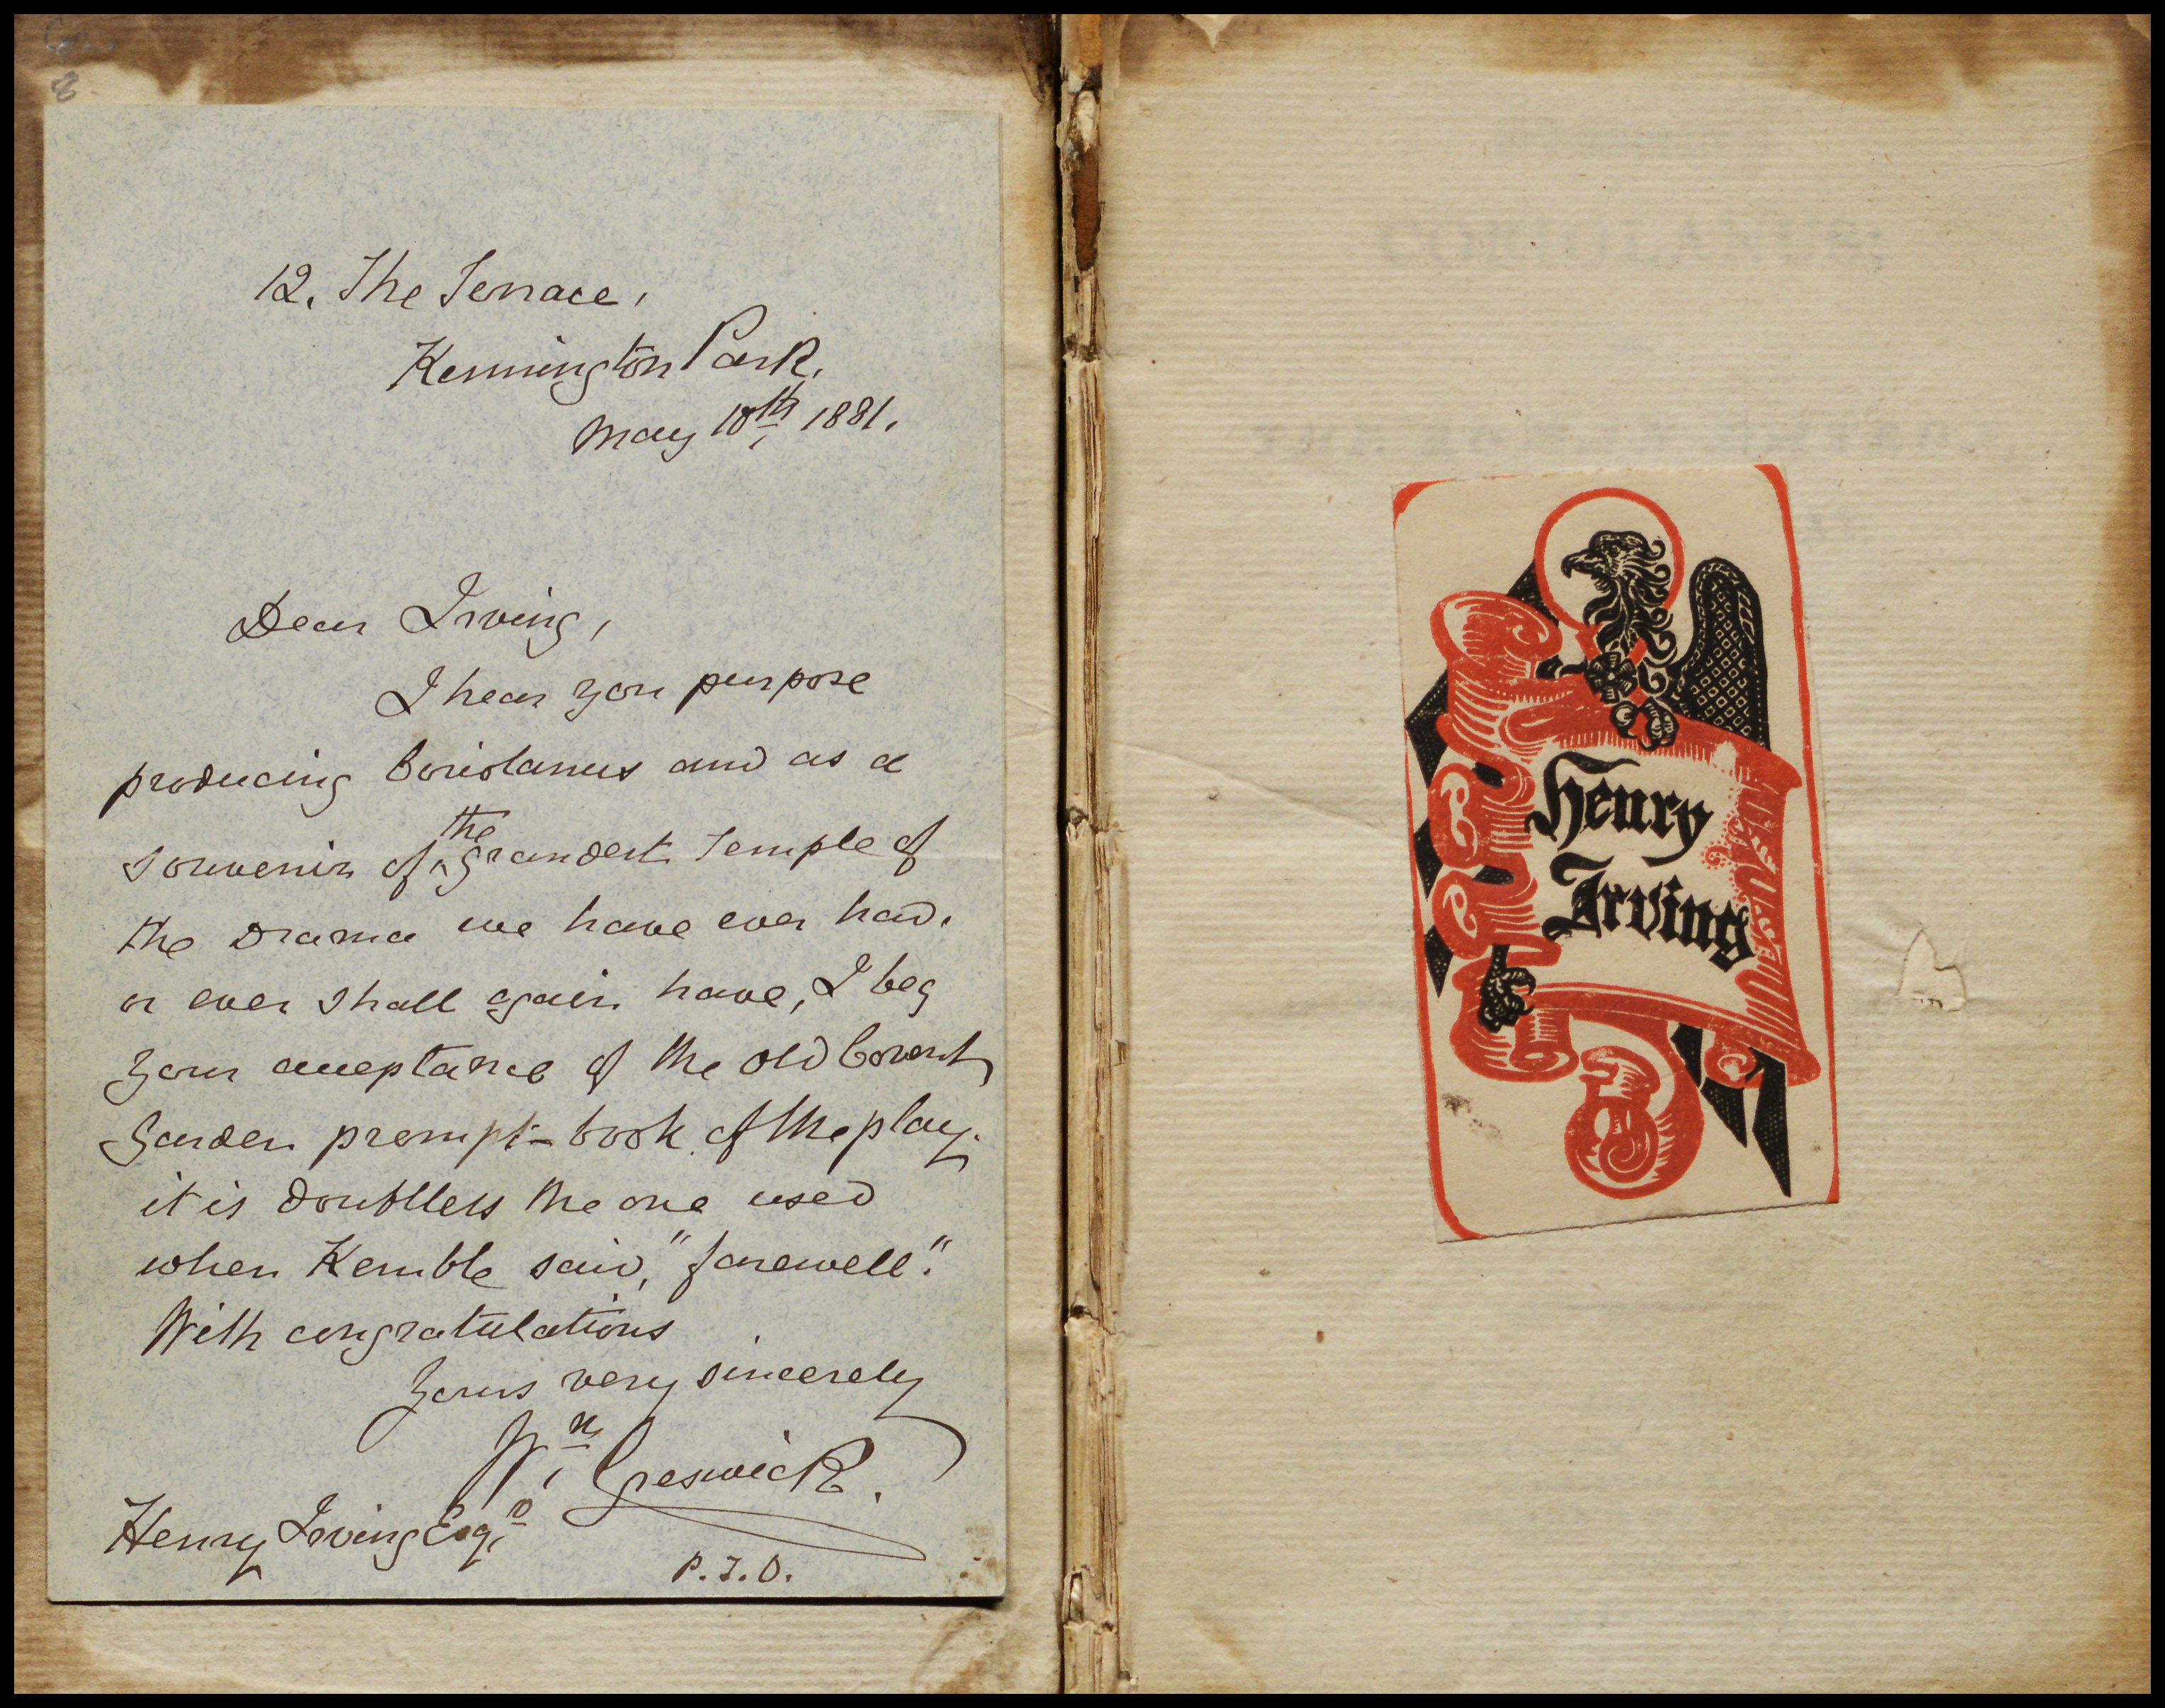 Henry Irving's copy of Coriolanus